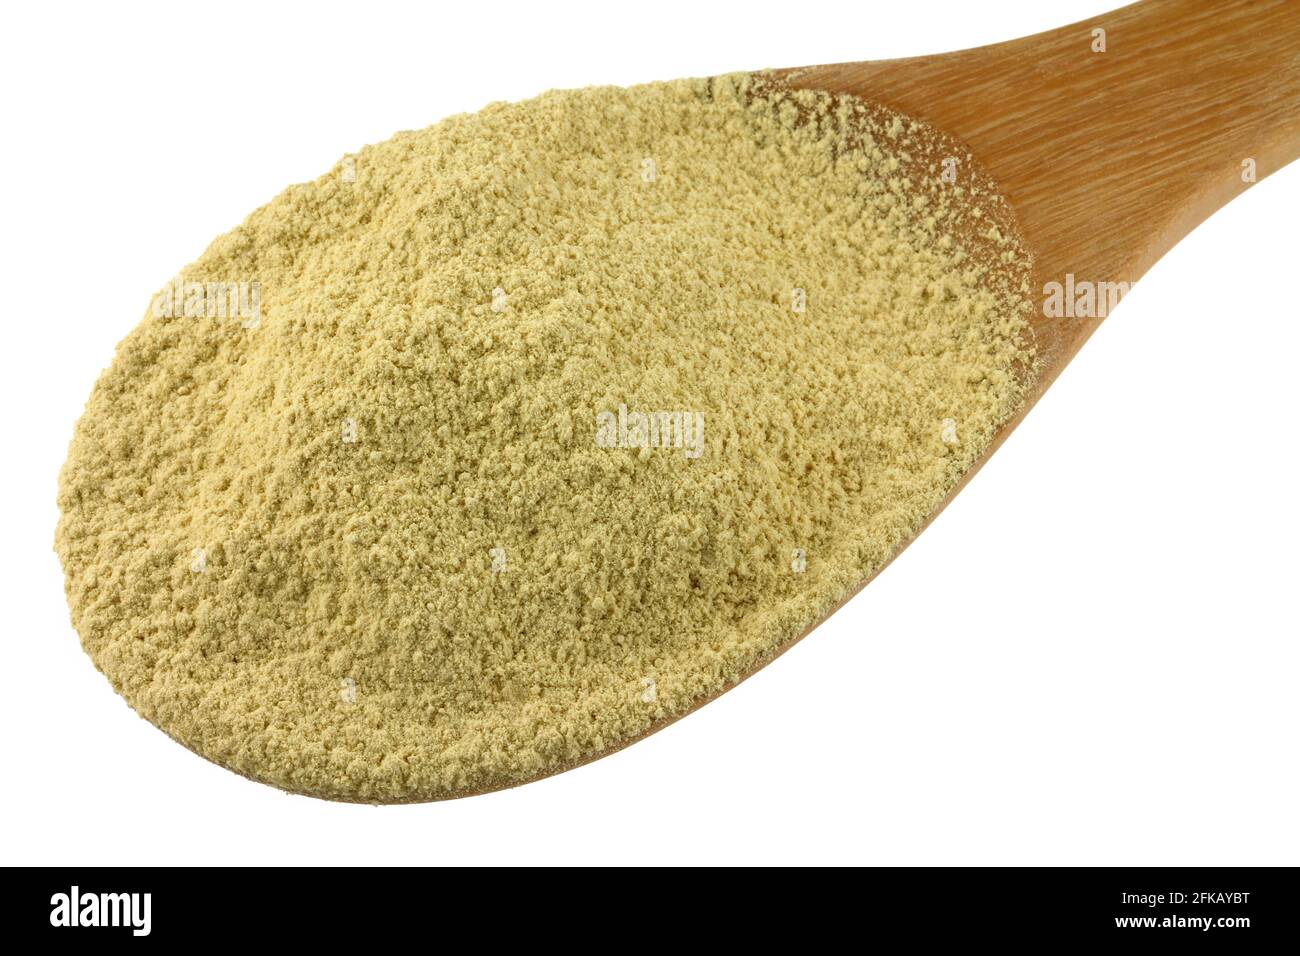 A spoon of find ground Thanaka Powder Stock Photo